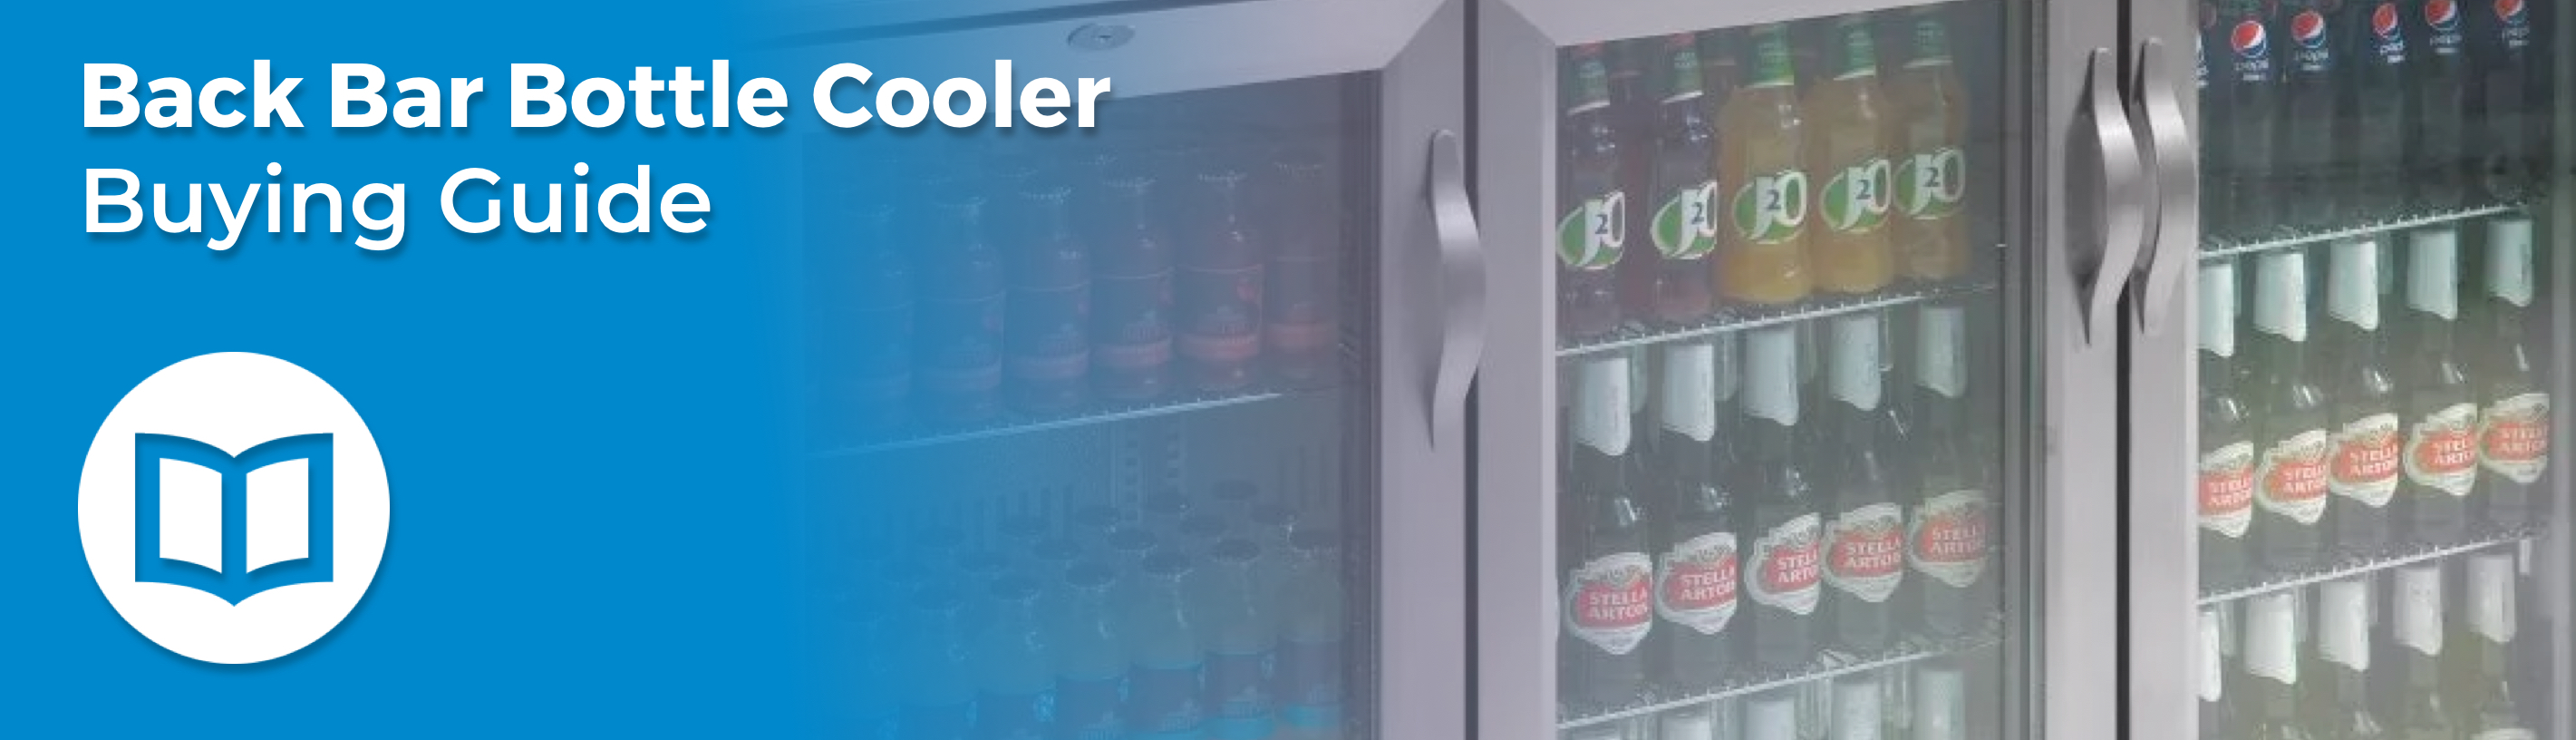 Back Bar Bottle Coolers Buying Guide